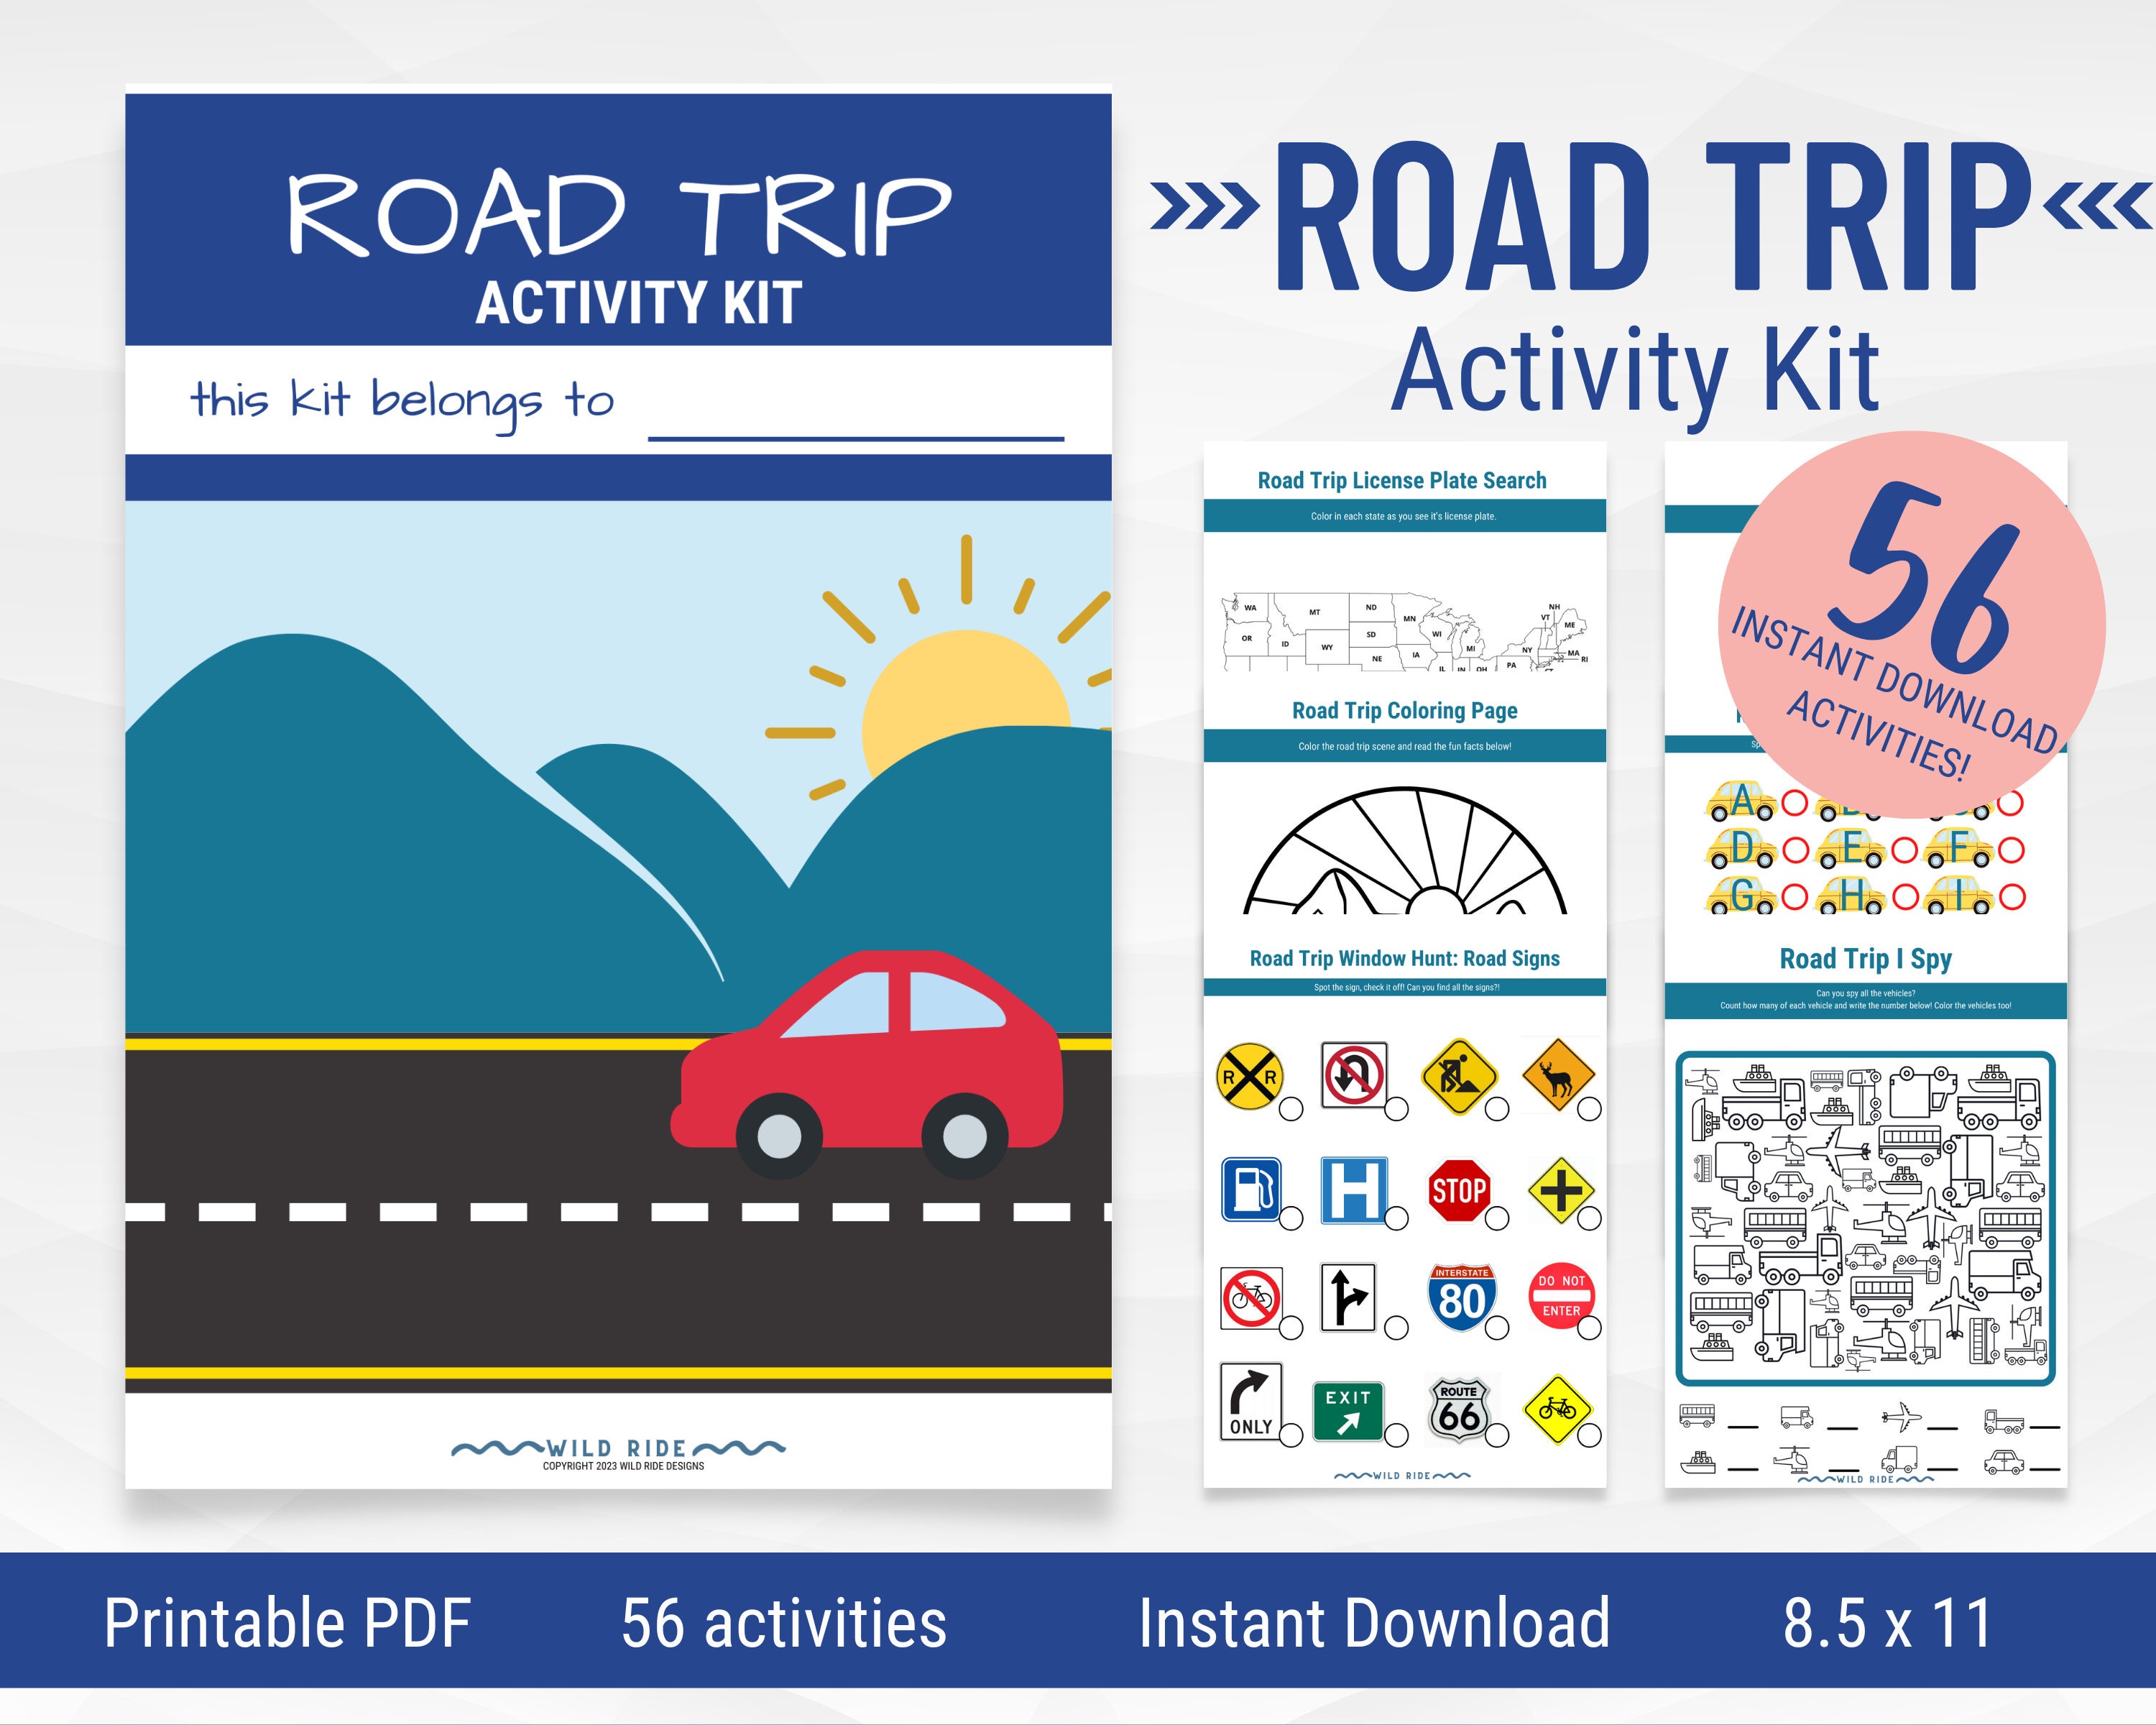 Road Trip Games for Kids. Road Trip Activities. Road Trip Activity Pack. Road  Trip Activities for Kids. Road Trip for Kids. Road Trip Bingo 